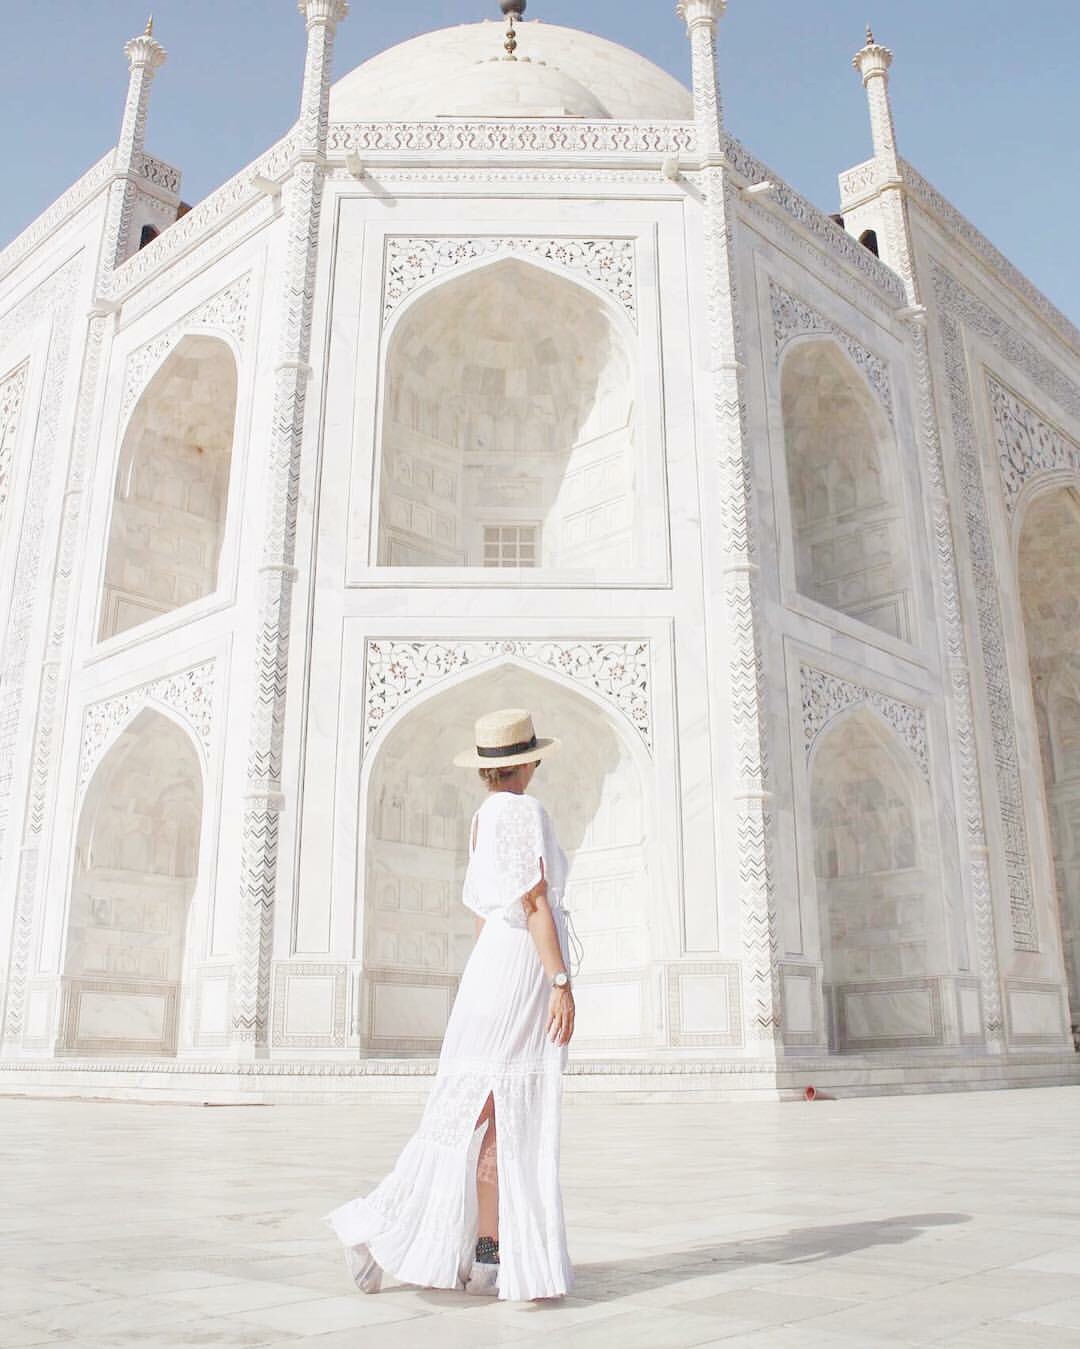 24 hour vacay: Taj Mahal